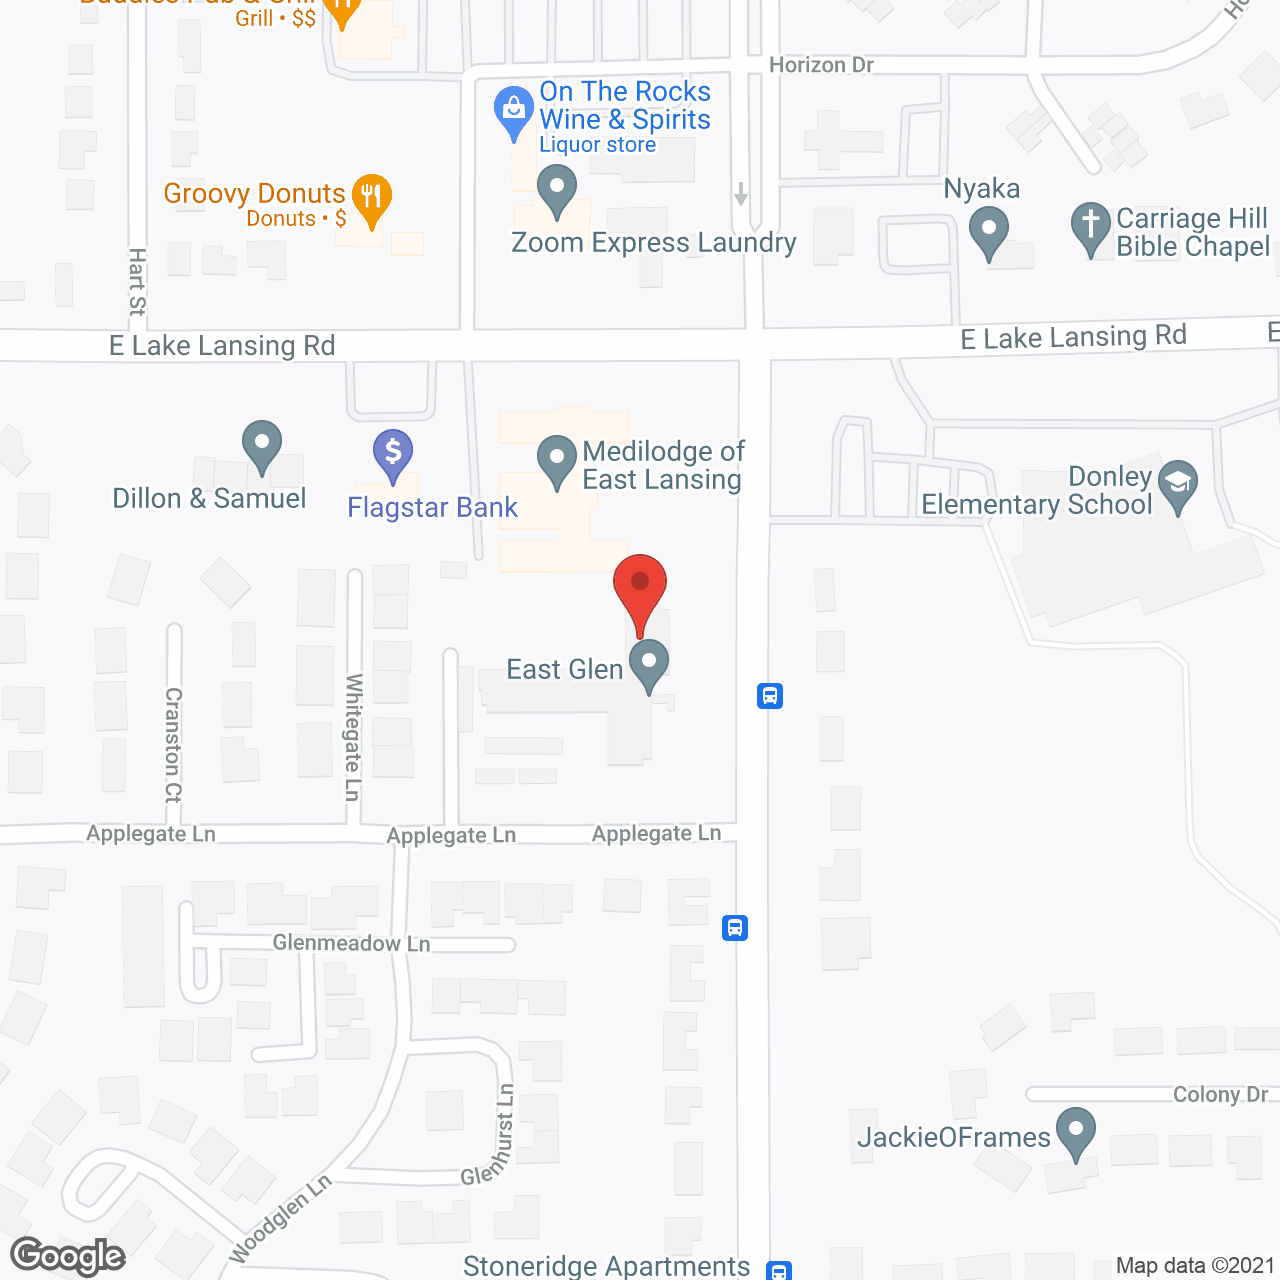 East Glen Elderly Apartments in google map